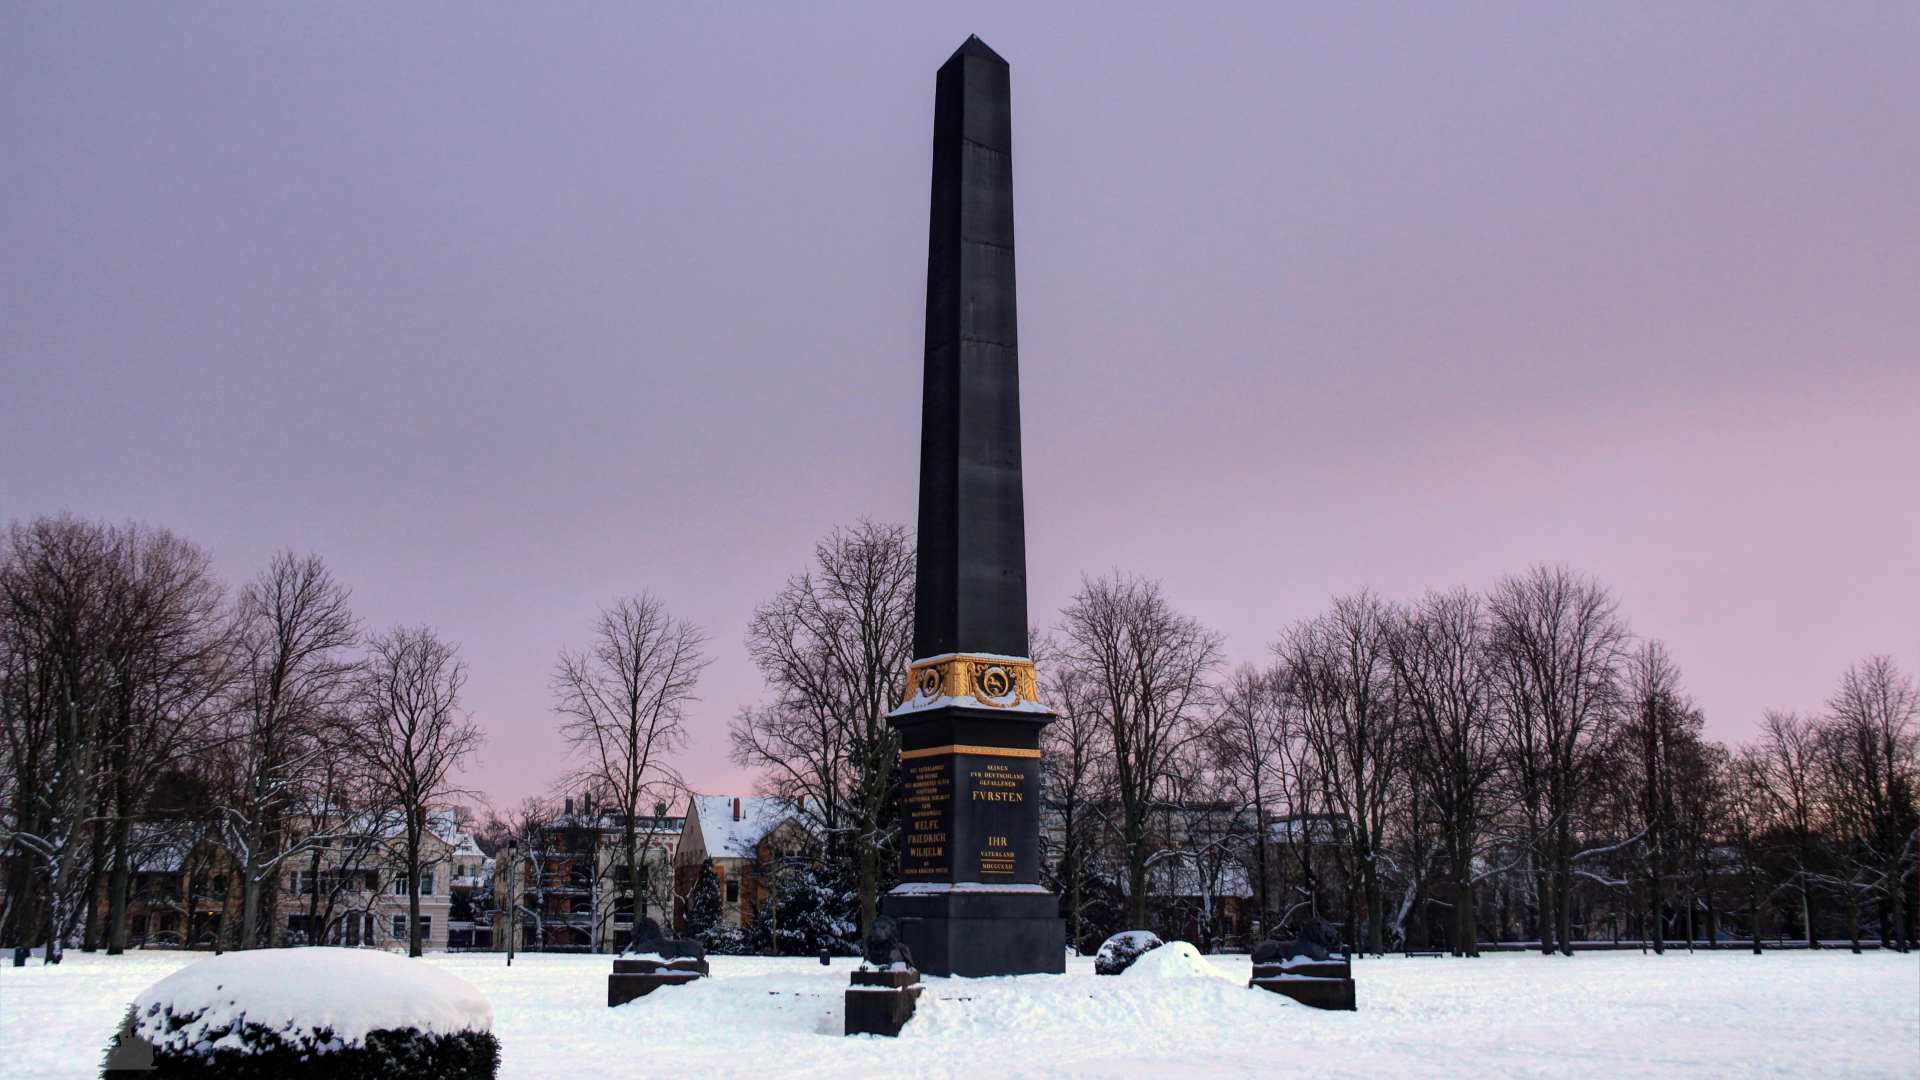 Obelisk am Löwenwall